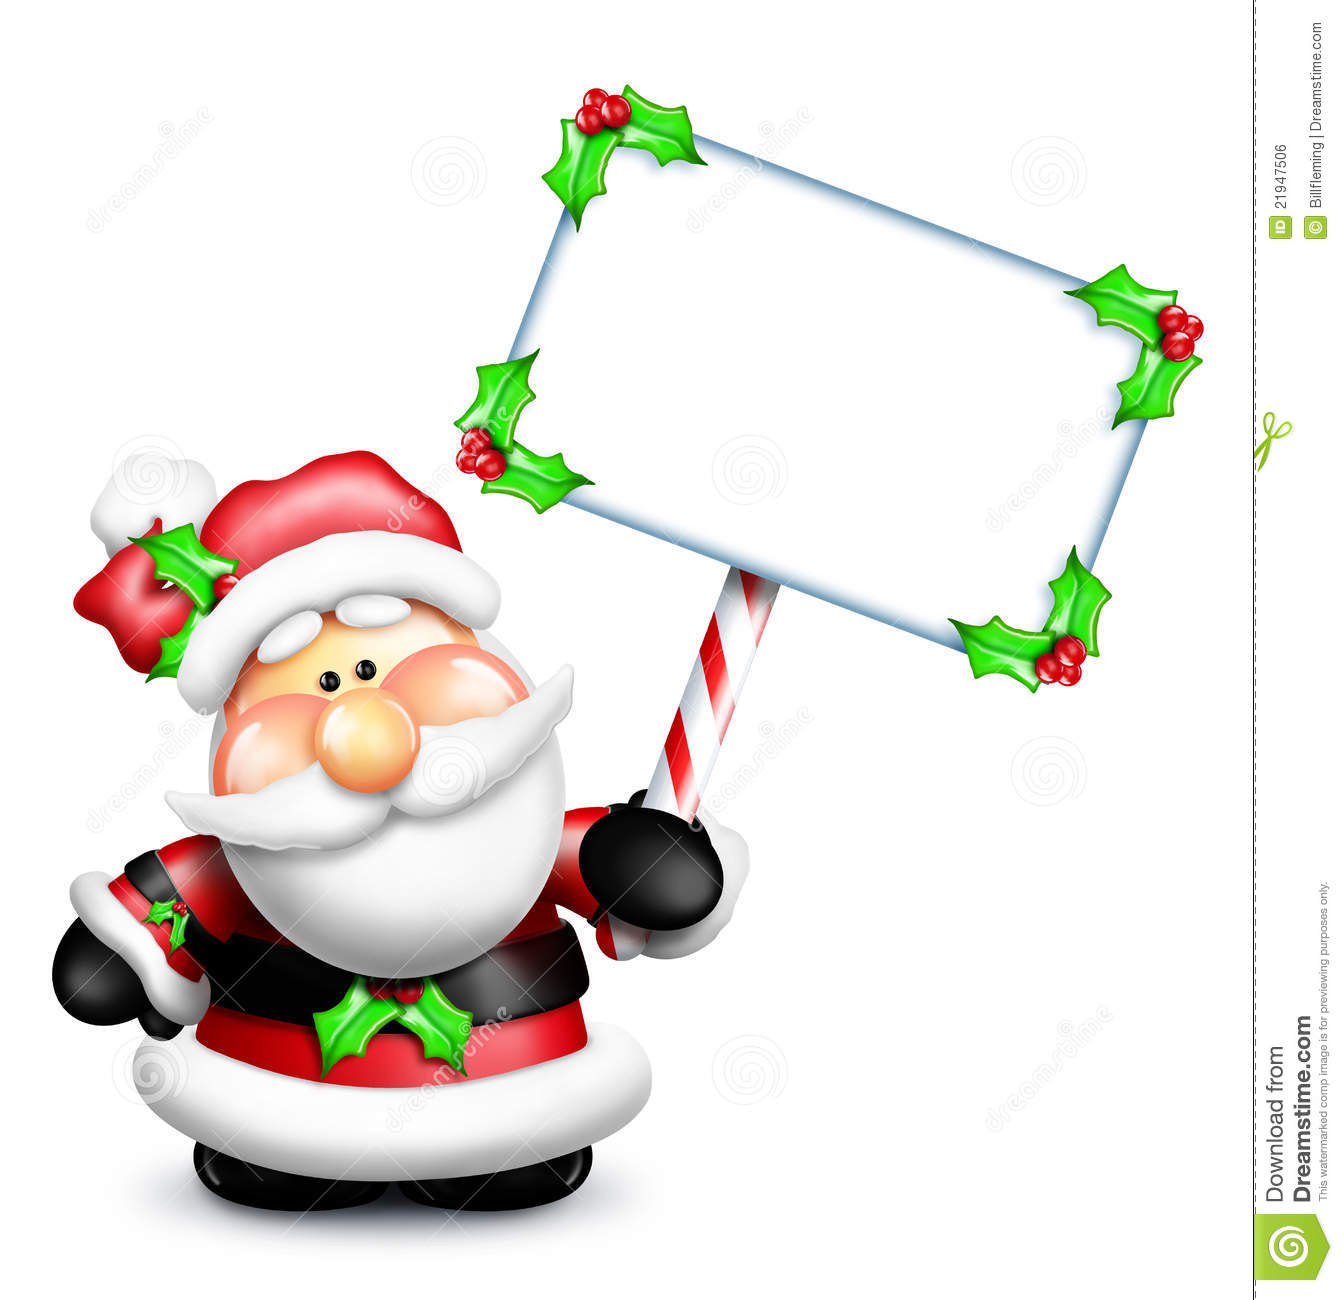 Cartoon Santa Holding Blank Sign Royalty Free Stock Image   Image    